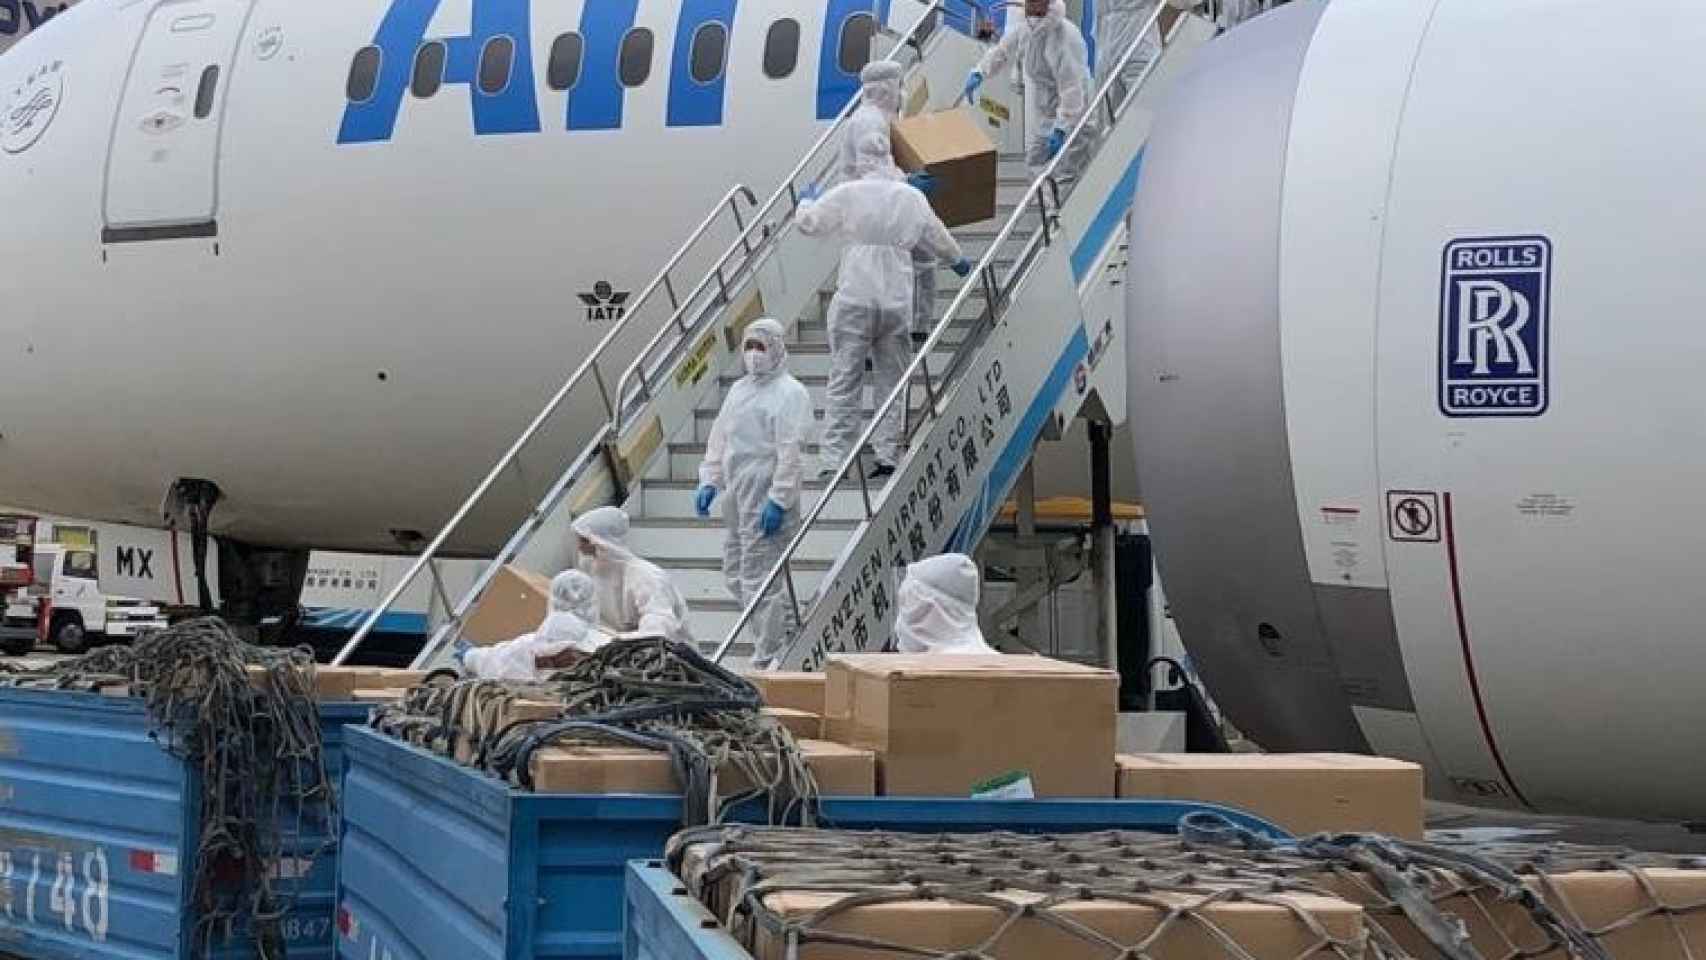 Operarios descargan material sanitario de un avión.